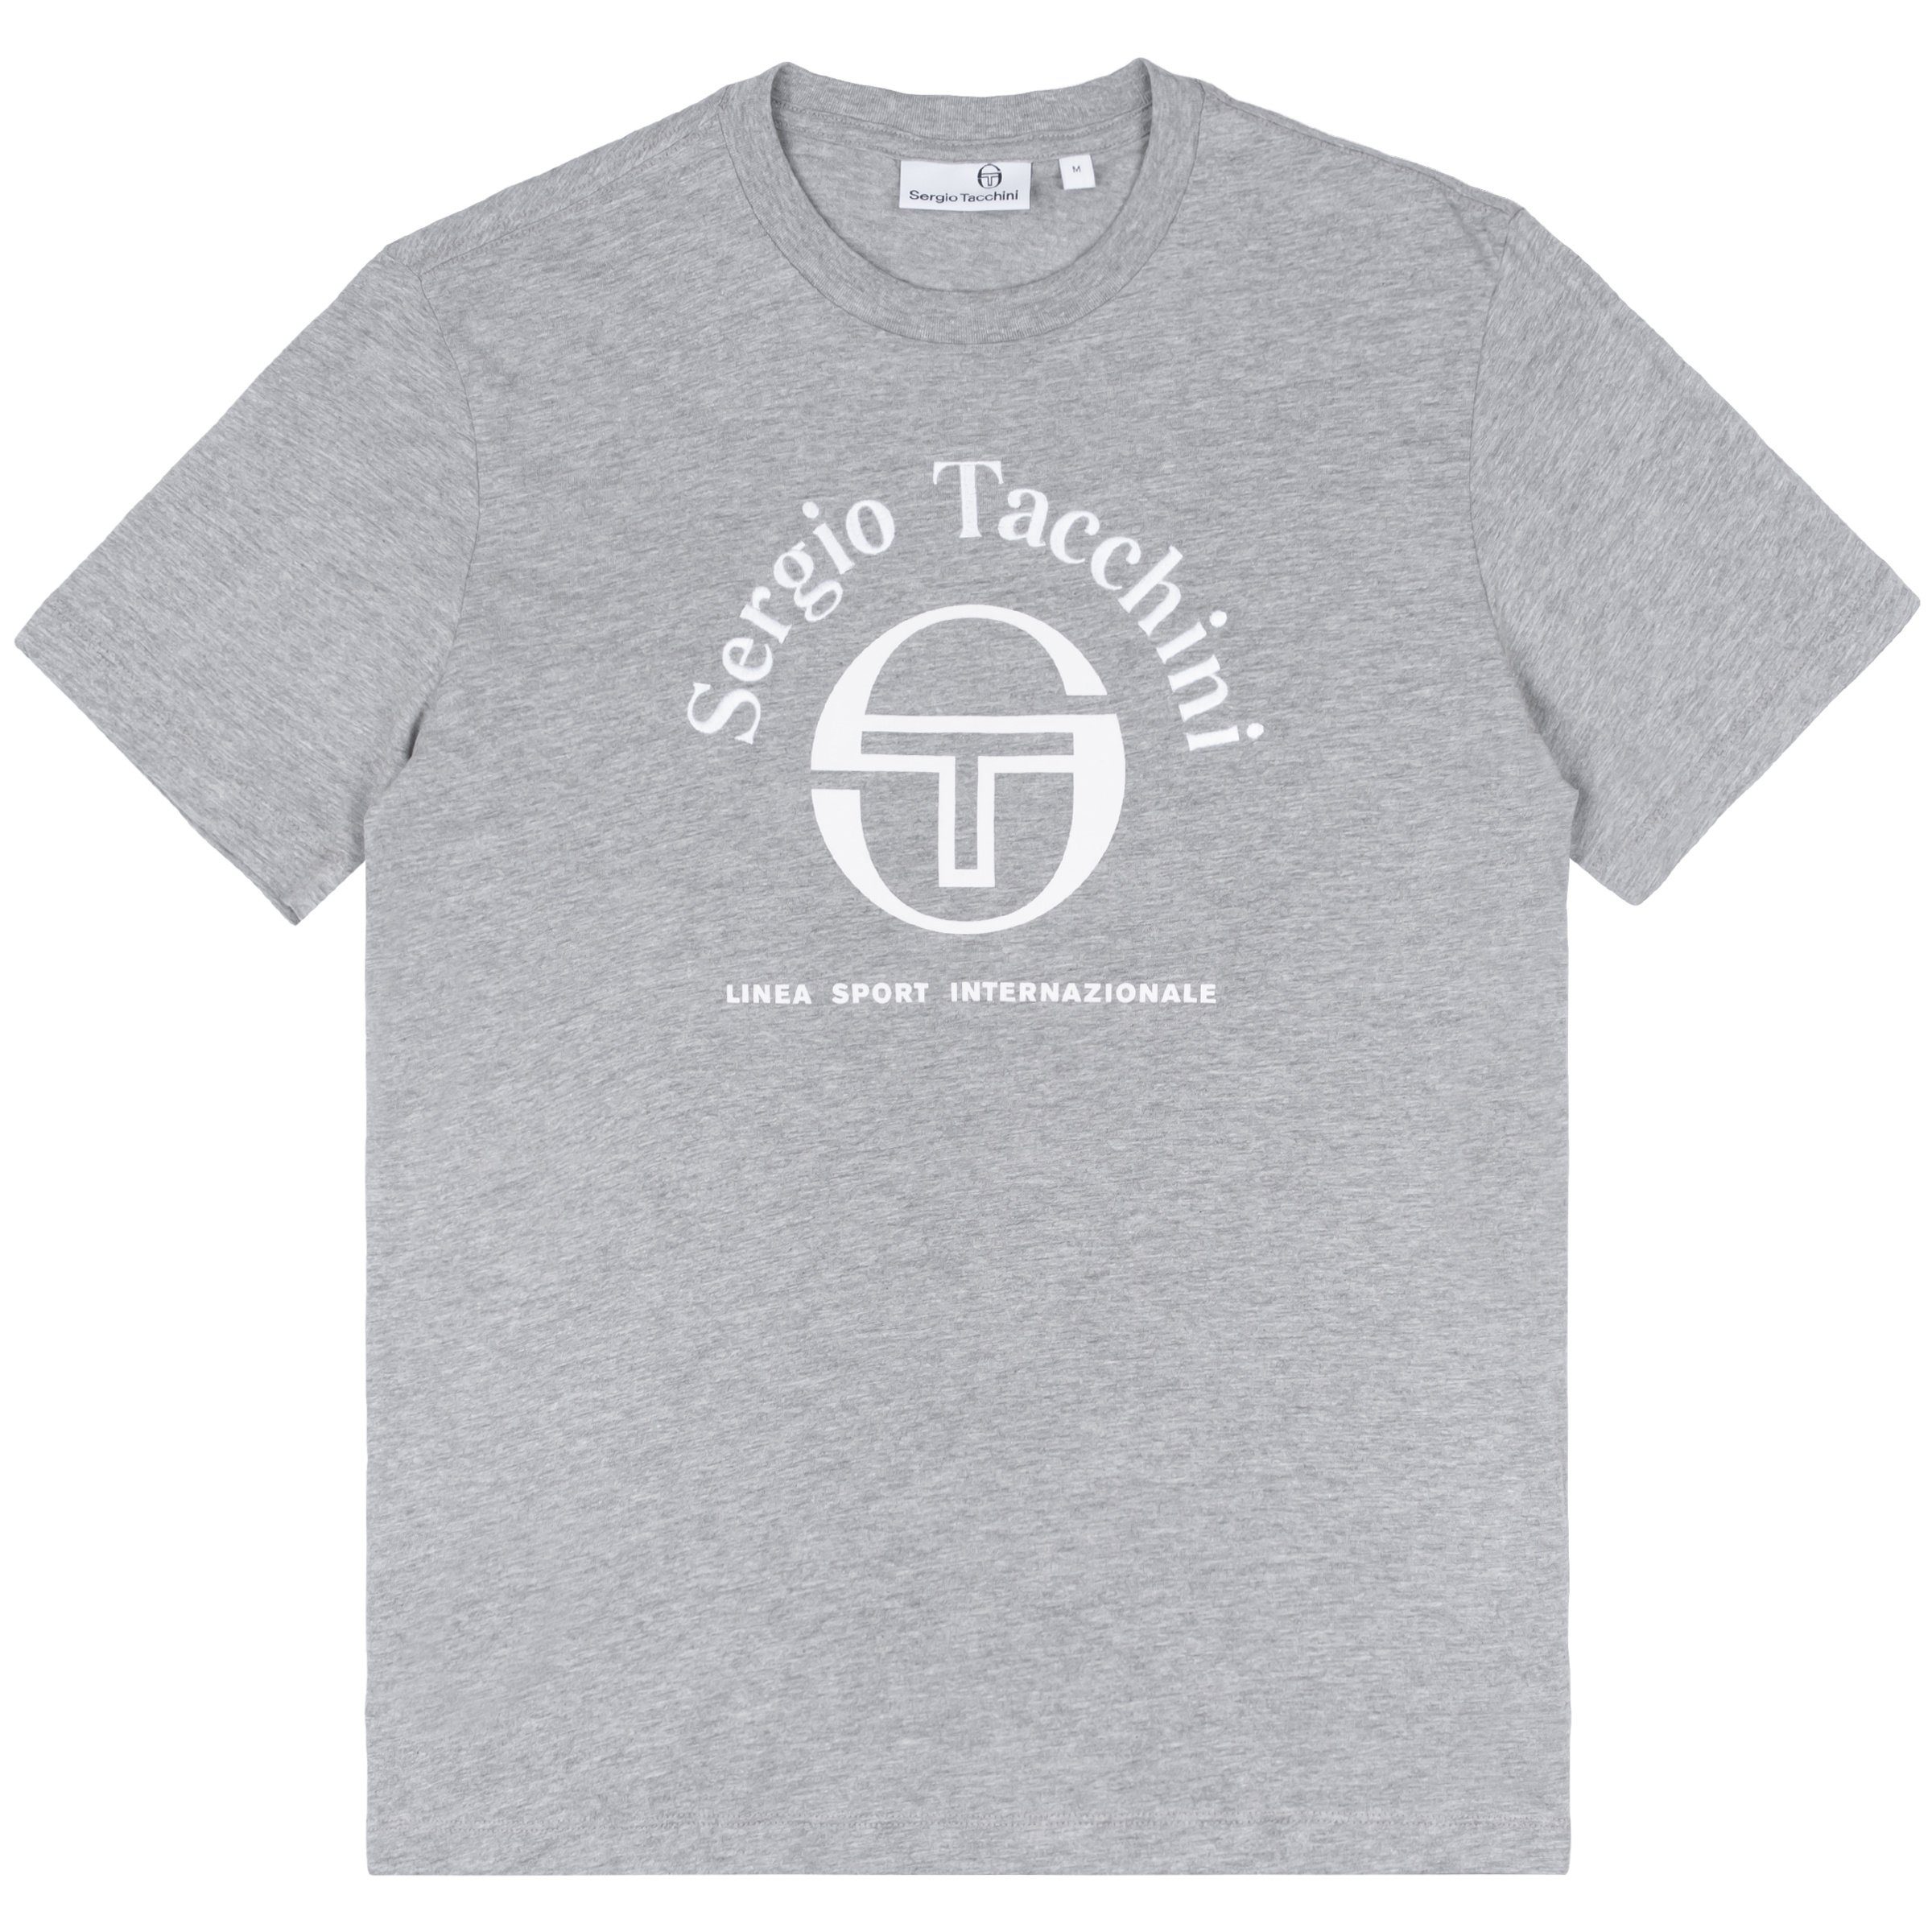 Arch Tacchini Herren grey heather T-Shirt Adult Sergio Sergio Type Tacchini T-Shirt